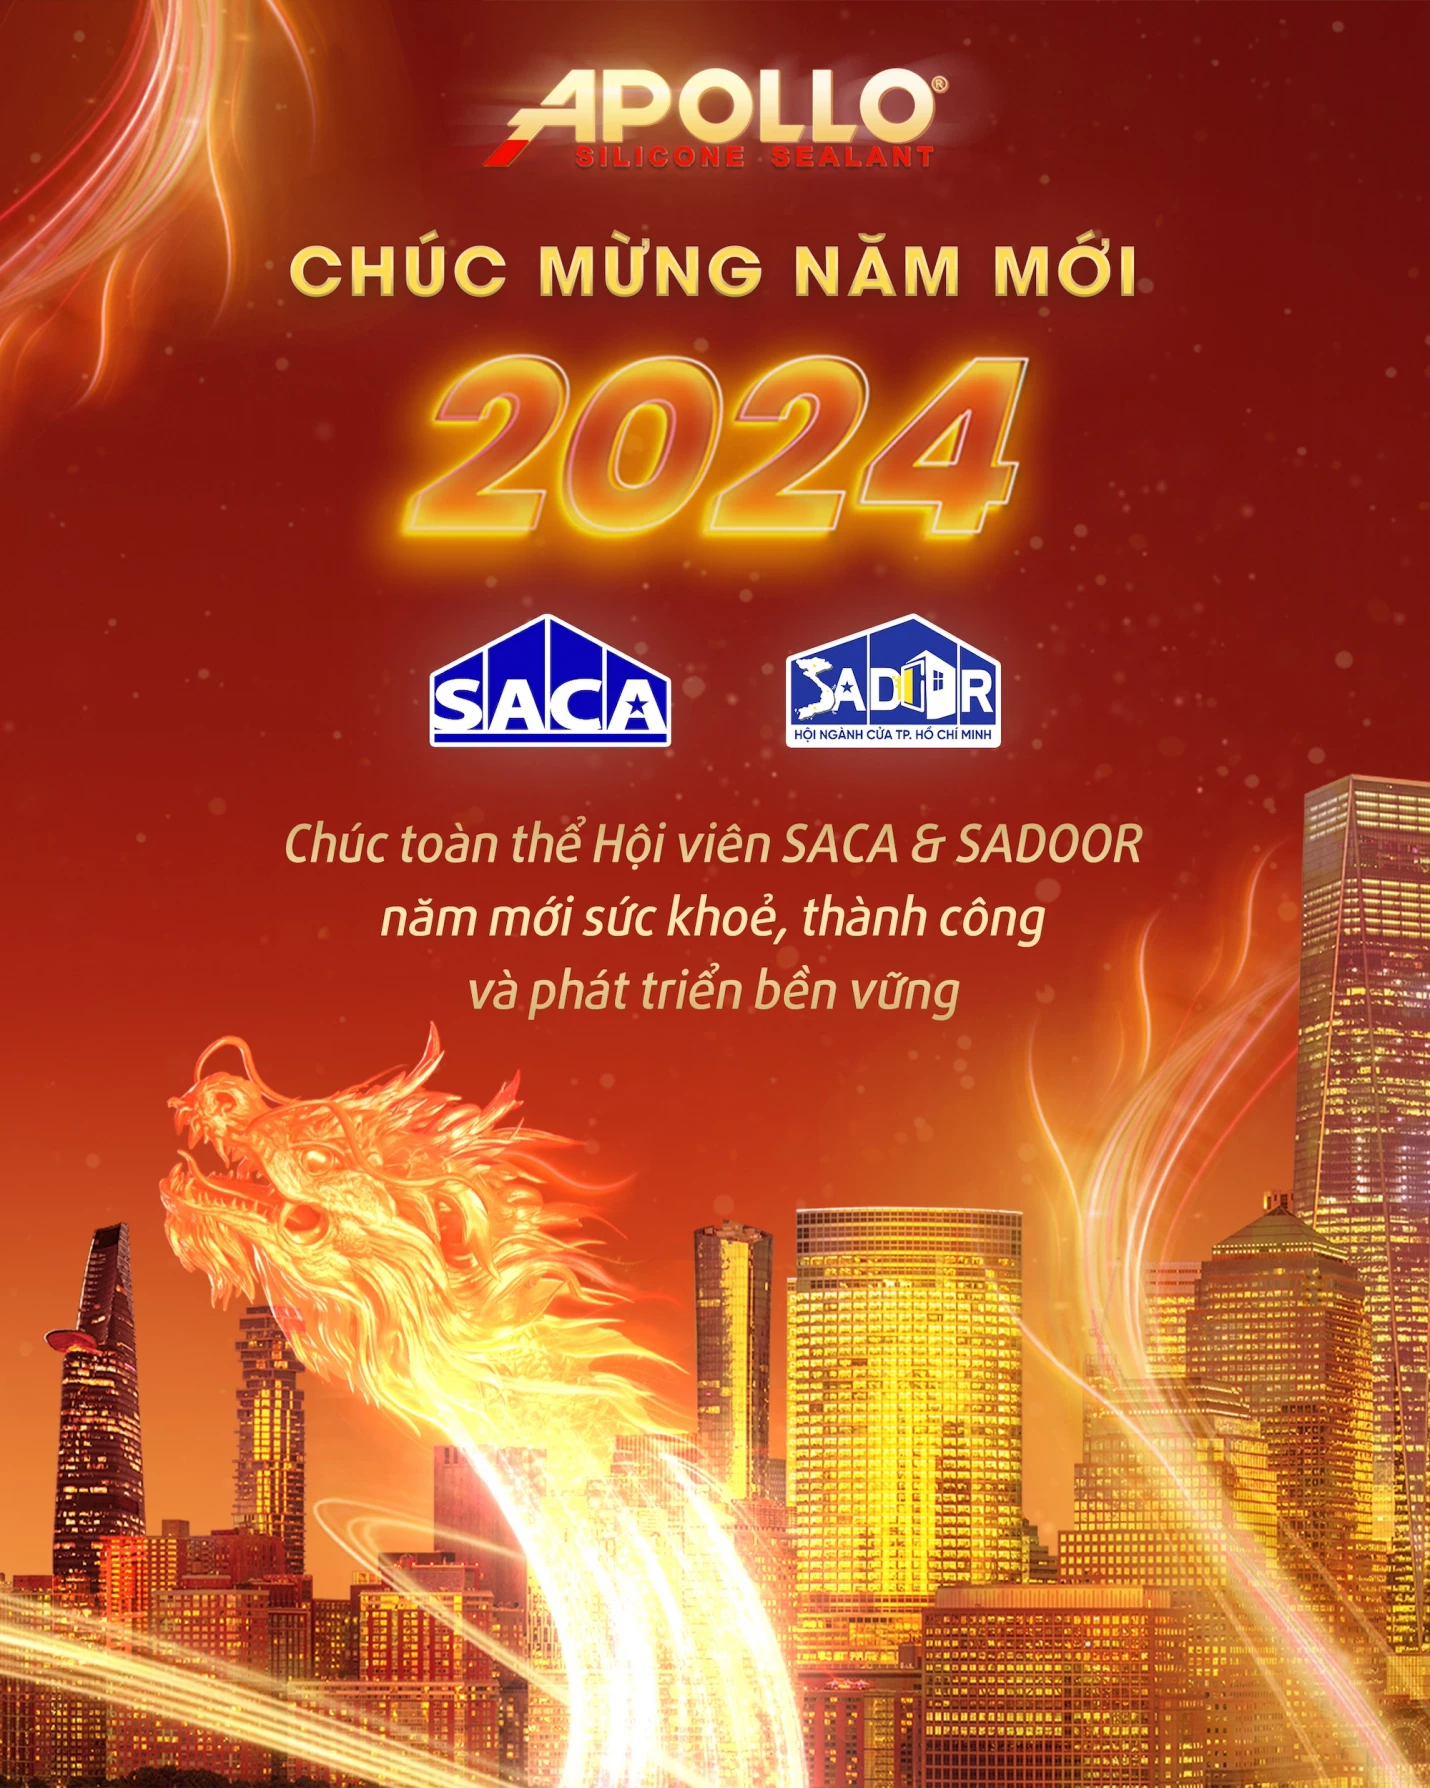 Apollo Silicone chúc mừng năm mới Giáp Thìn 2024 hiệp hội SACA &amp; SADOOR